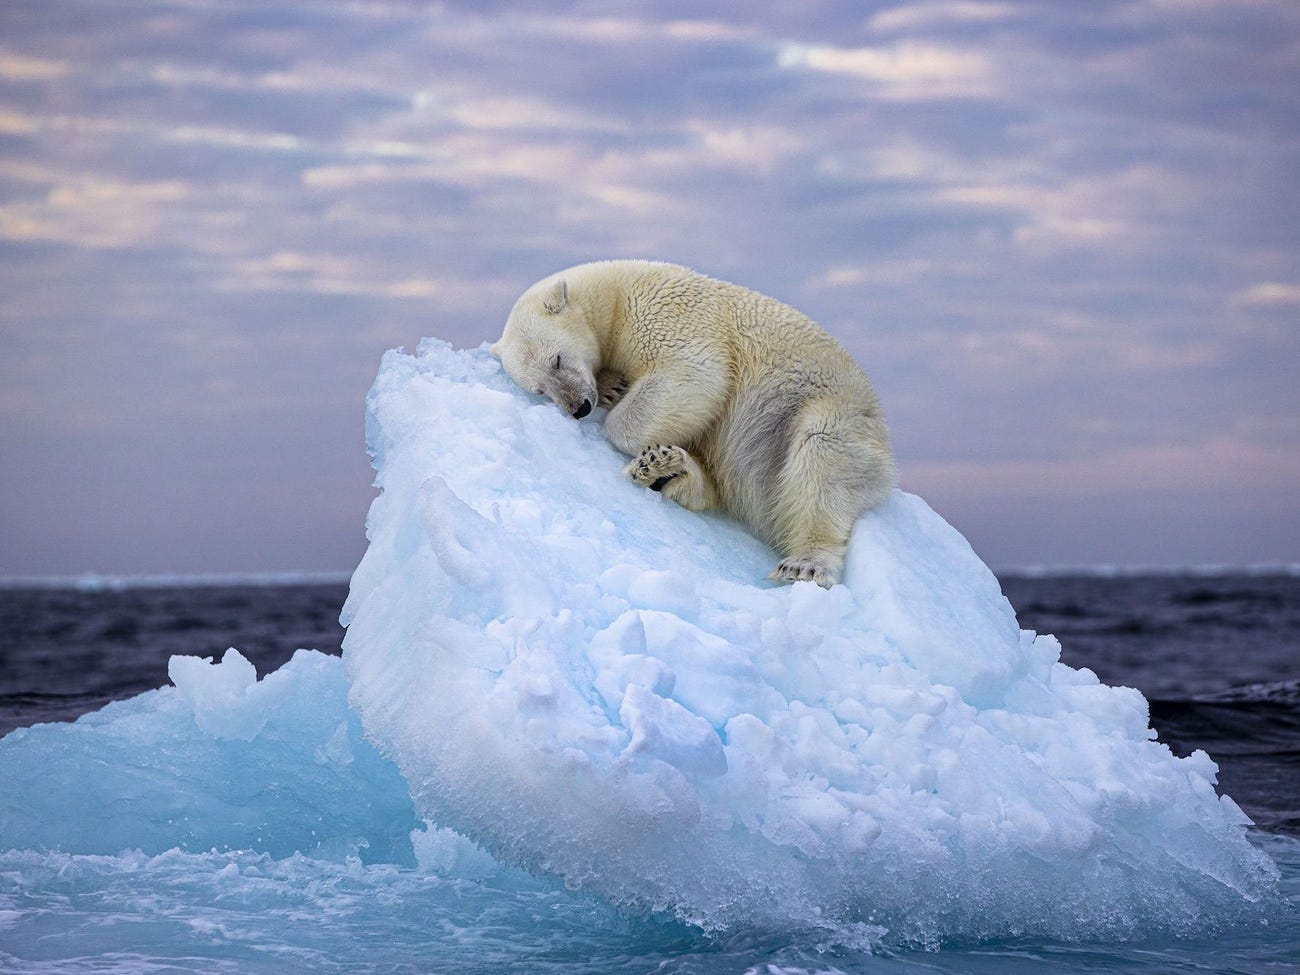 Polar bear sleeping all curled up on steep ice berg